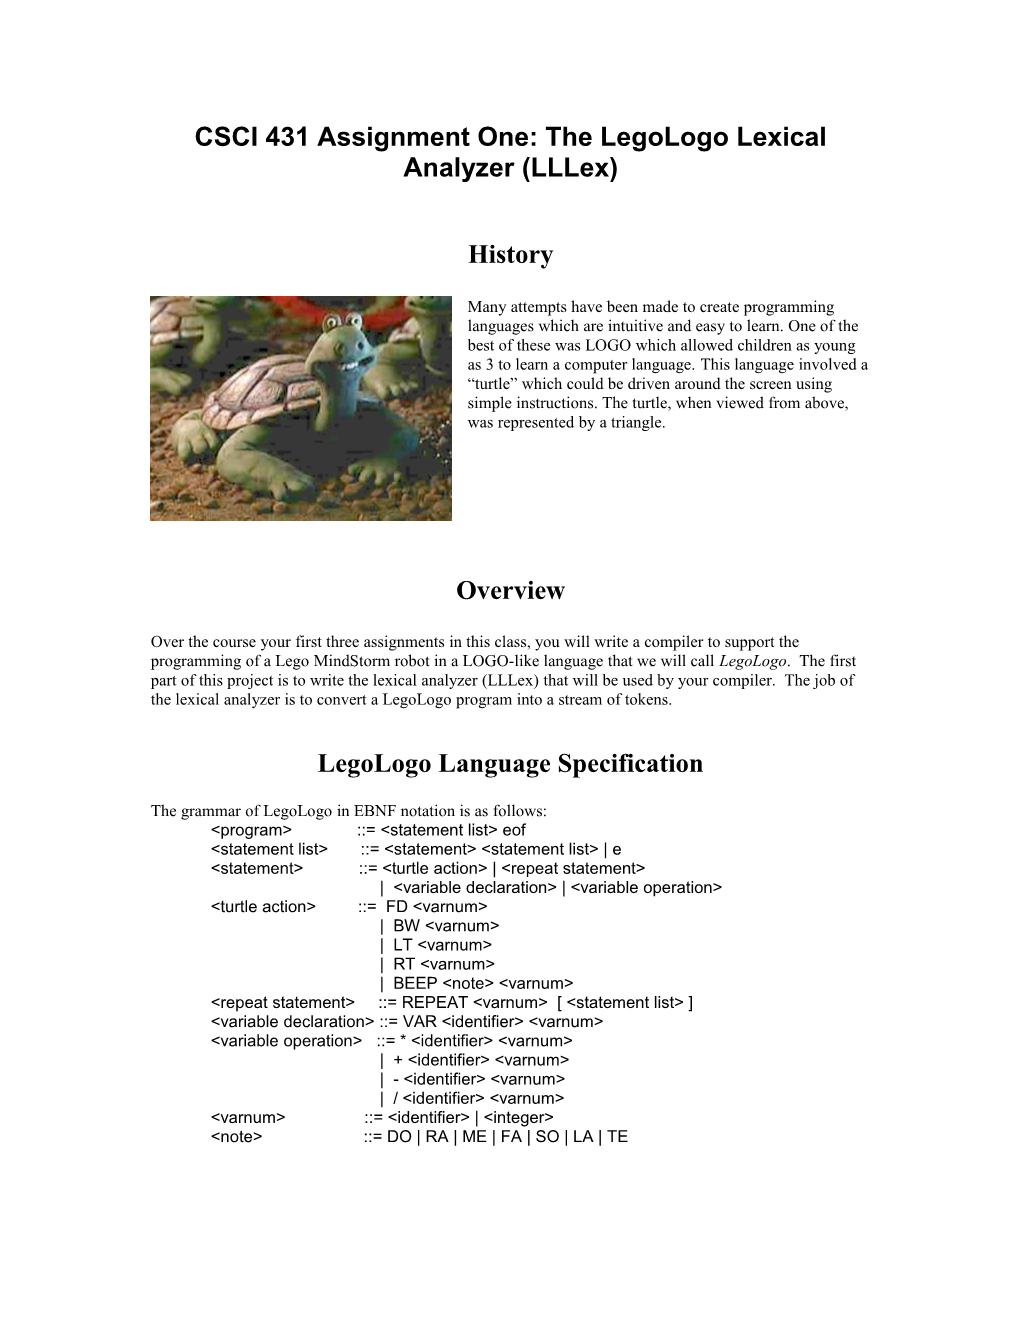 CSCI 431 Assignment One: the Legologo Lexical Analyzer (Lllex)